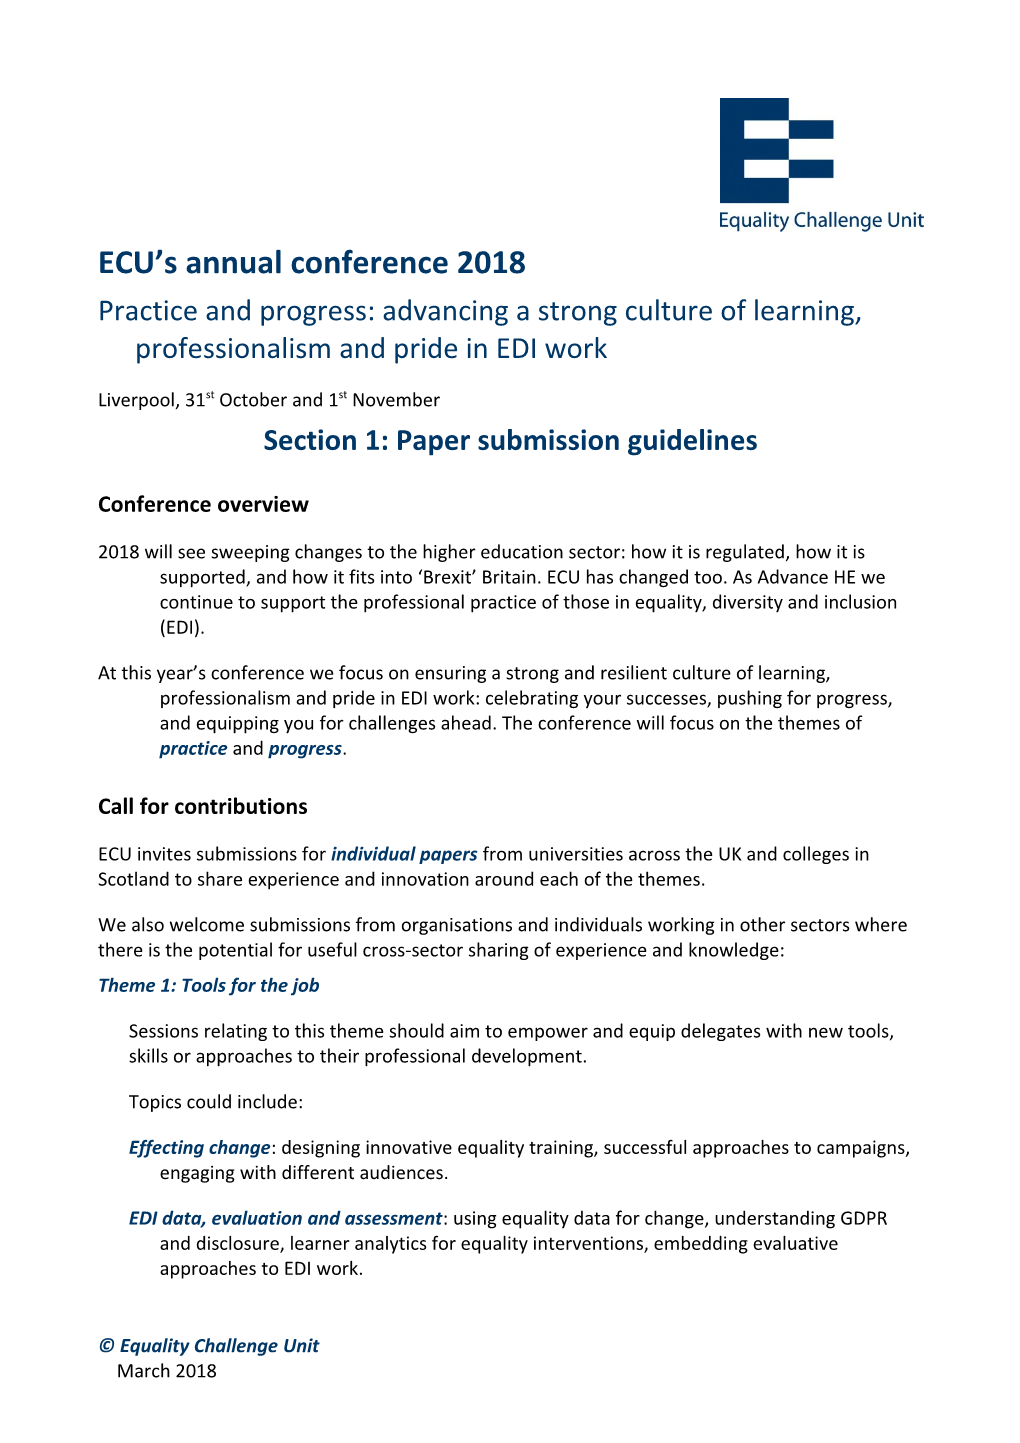 ECU S Annual Conference 2018